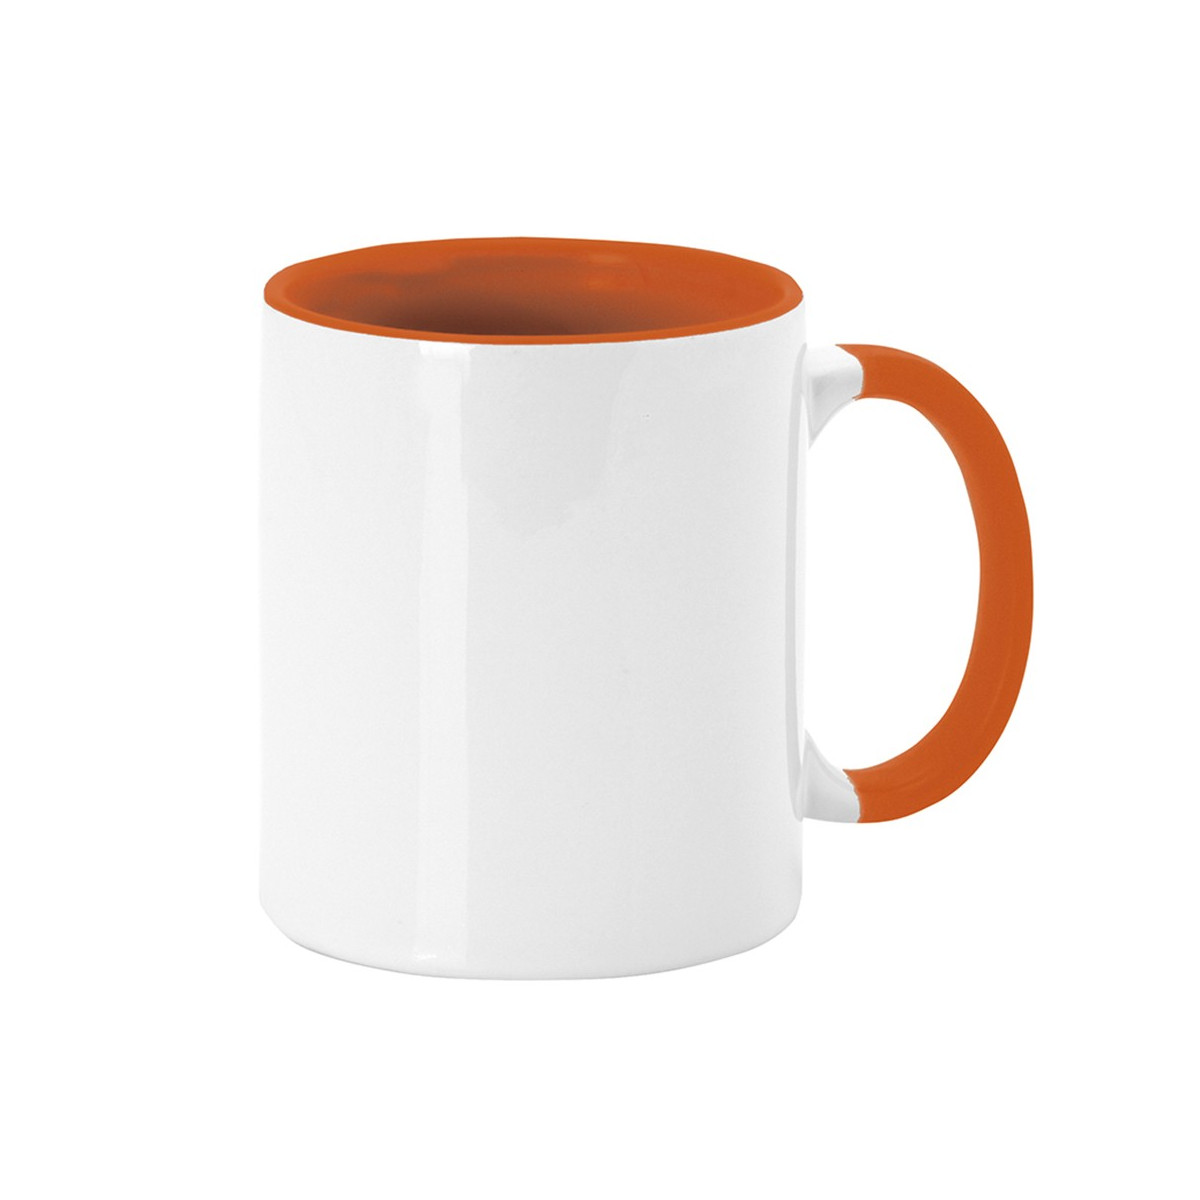 Mug sublimation harnet couleur orange